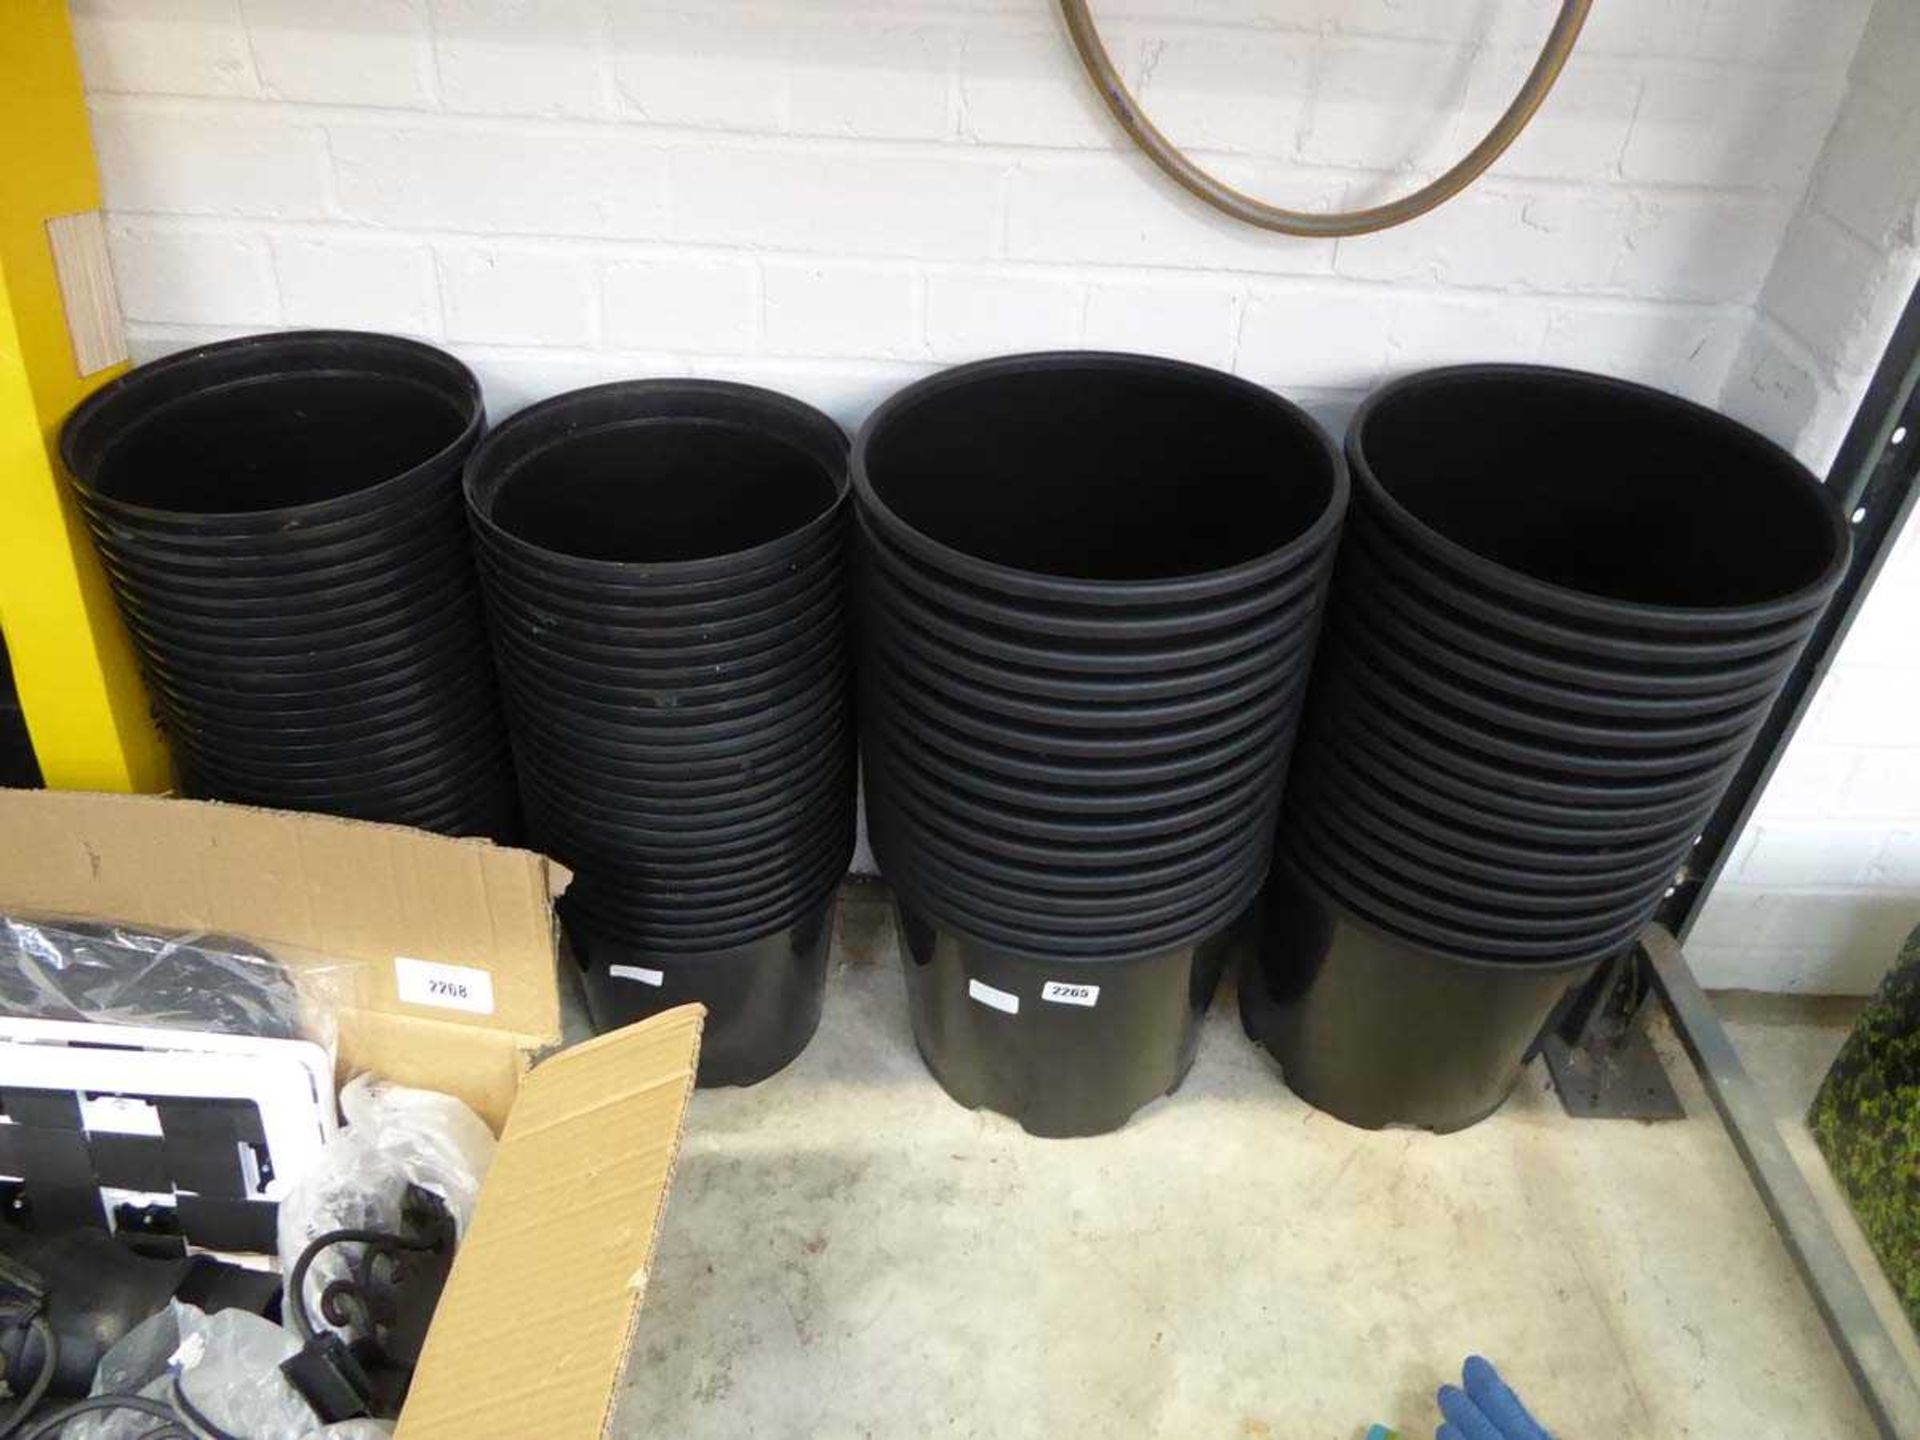 4 stacks of various size black plastic garden pots